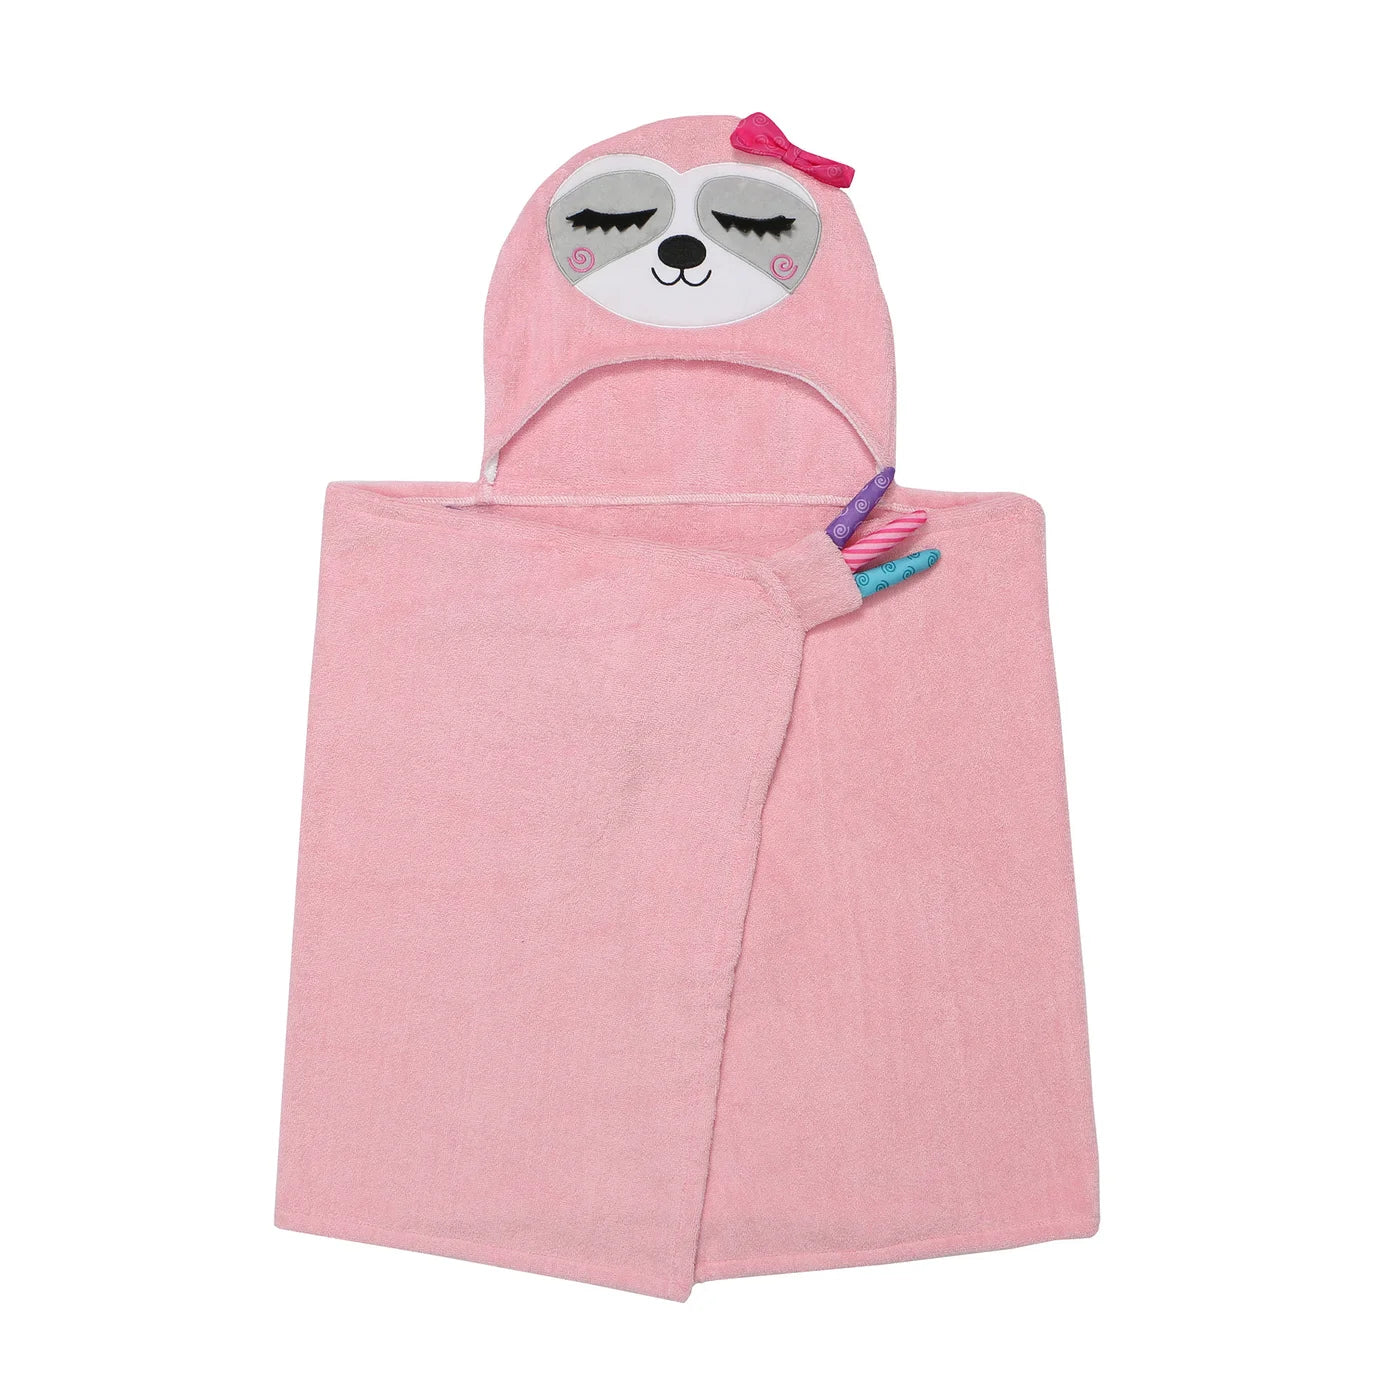 Personalized Kids Plush Terry Hooded Bath Towel - Sadie Sloth 2Y+